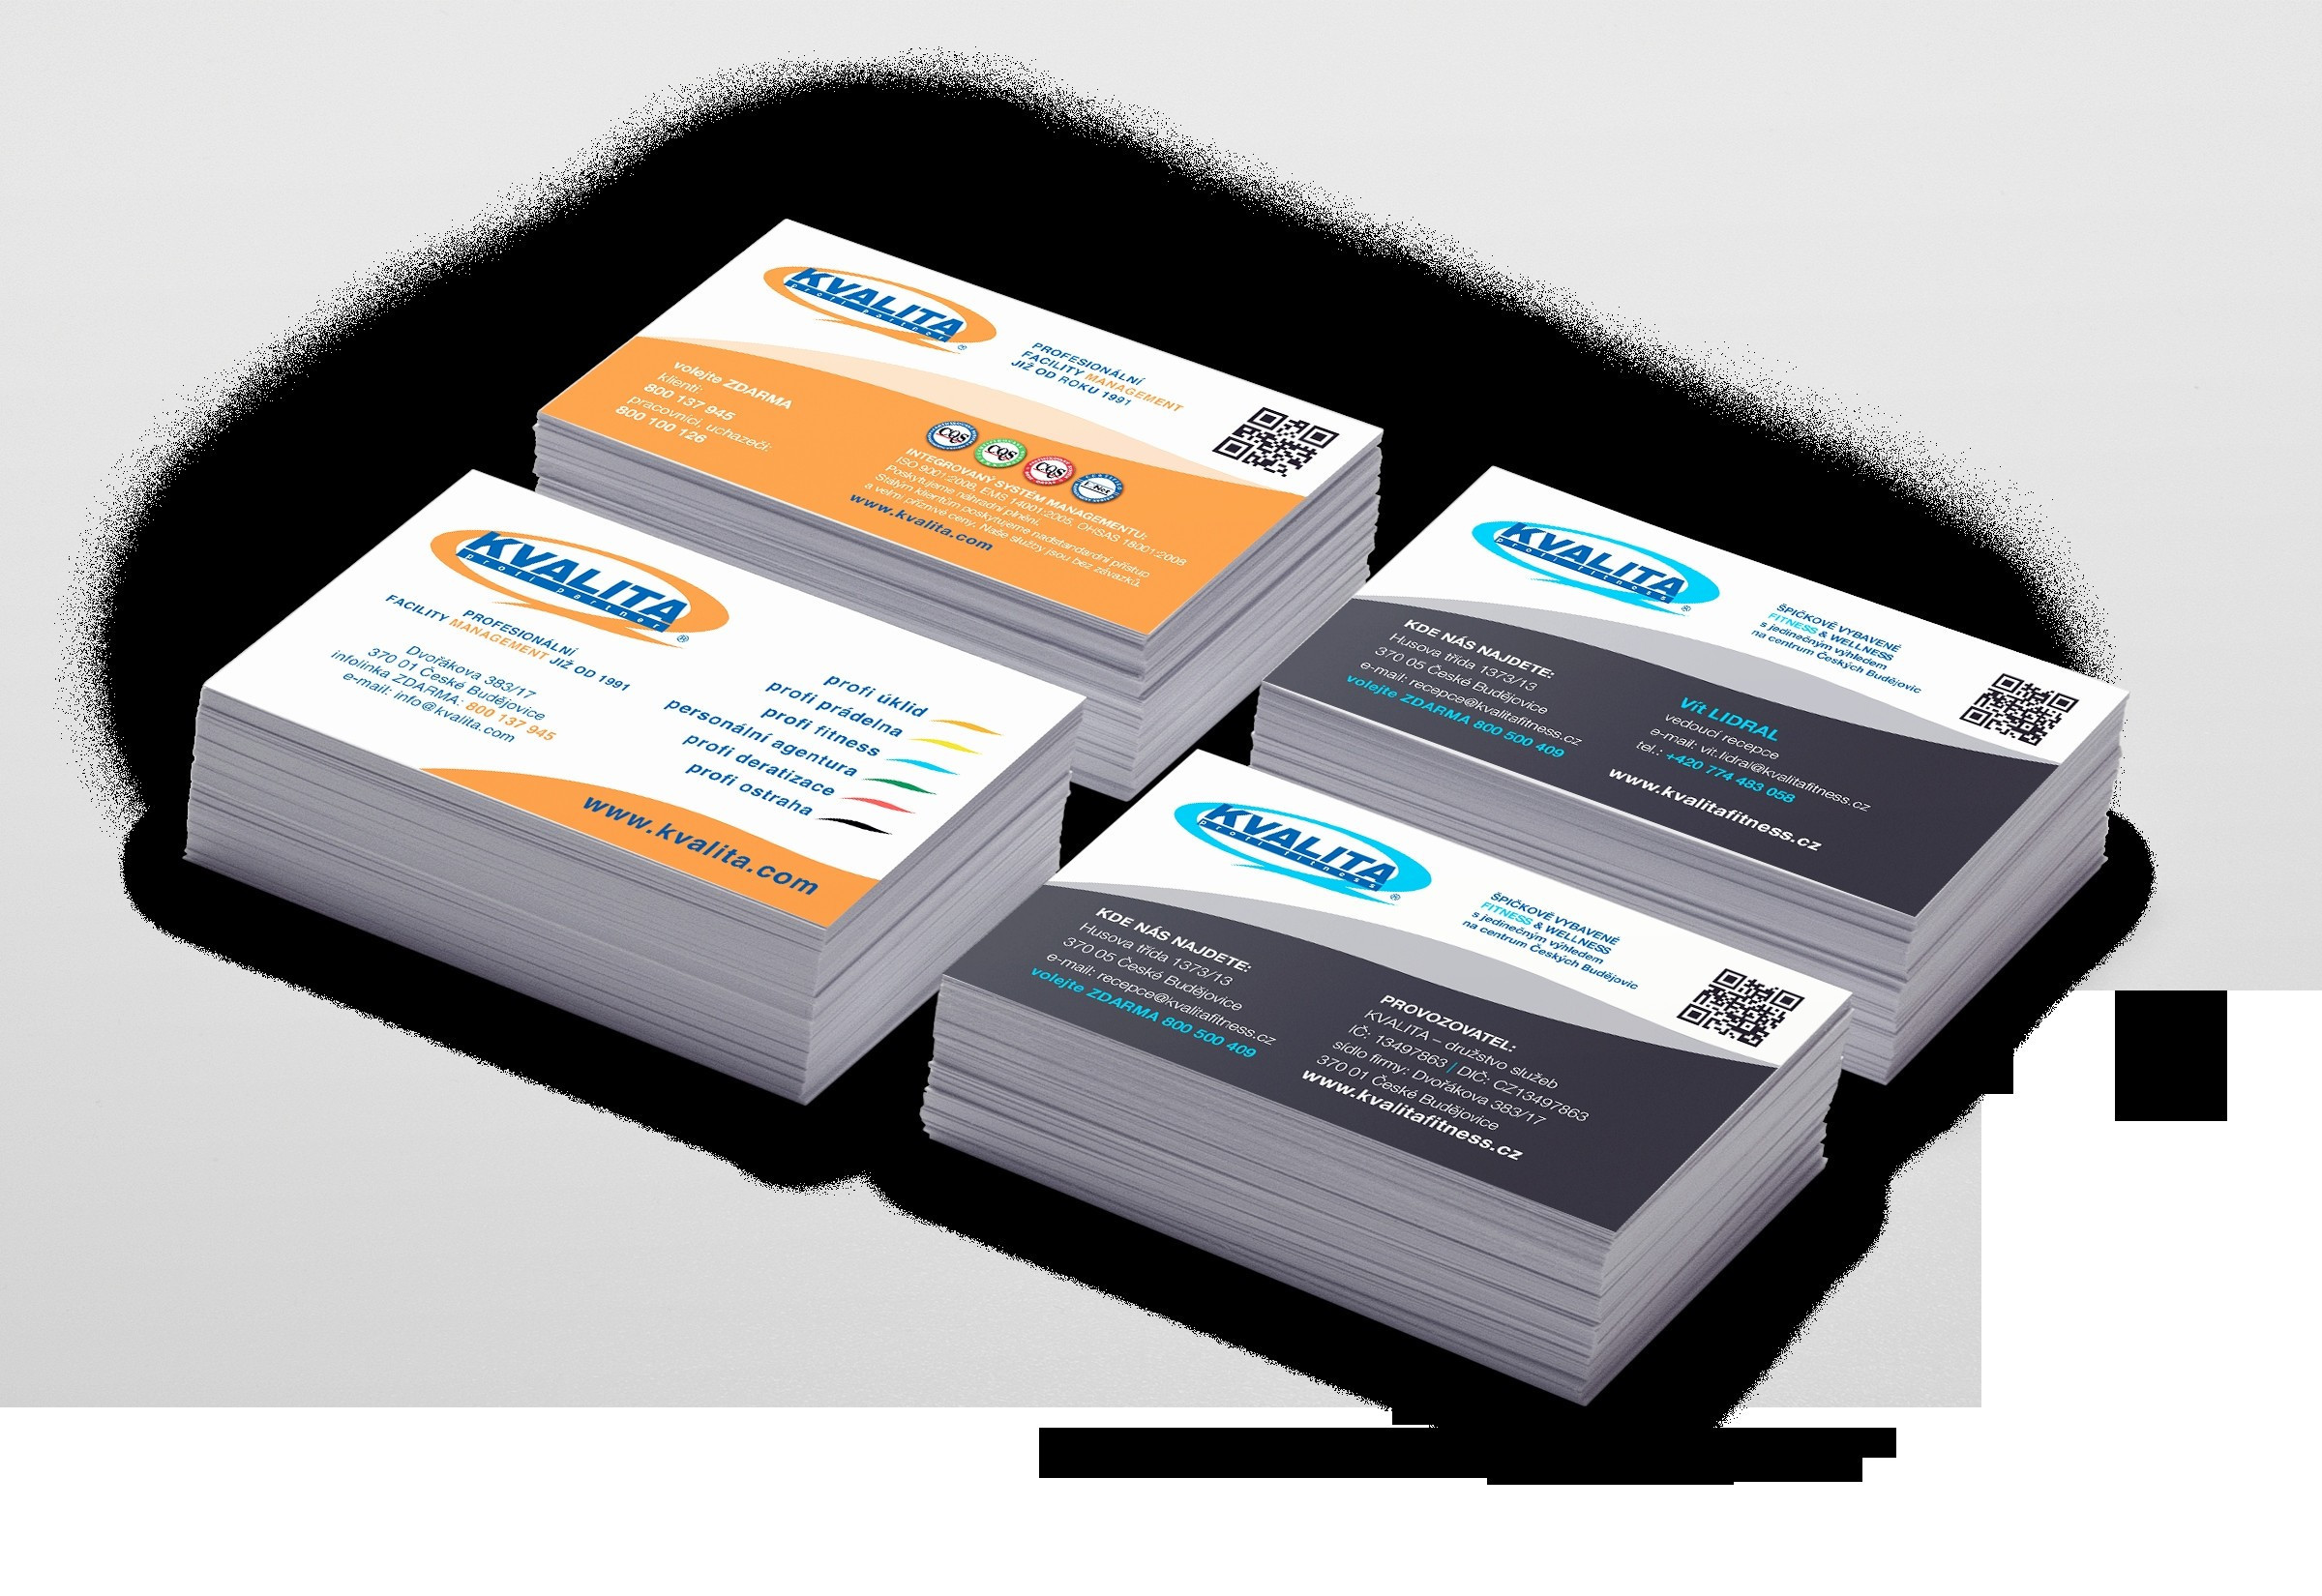 vistaprint business cards free 500 electronic business card templates new vistaprint calendar promo of vistaprint business cards free 500